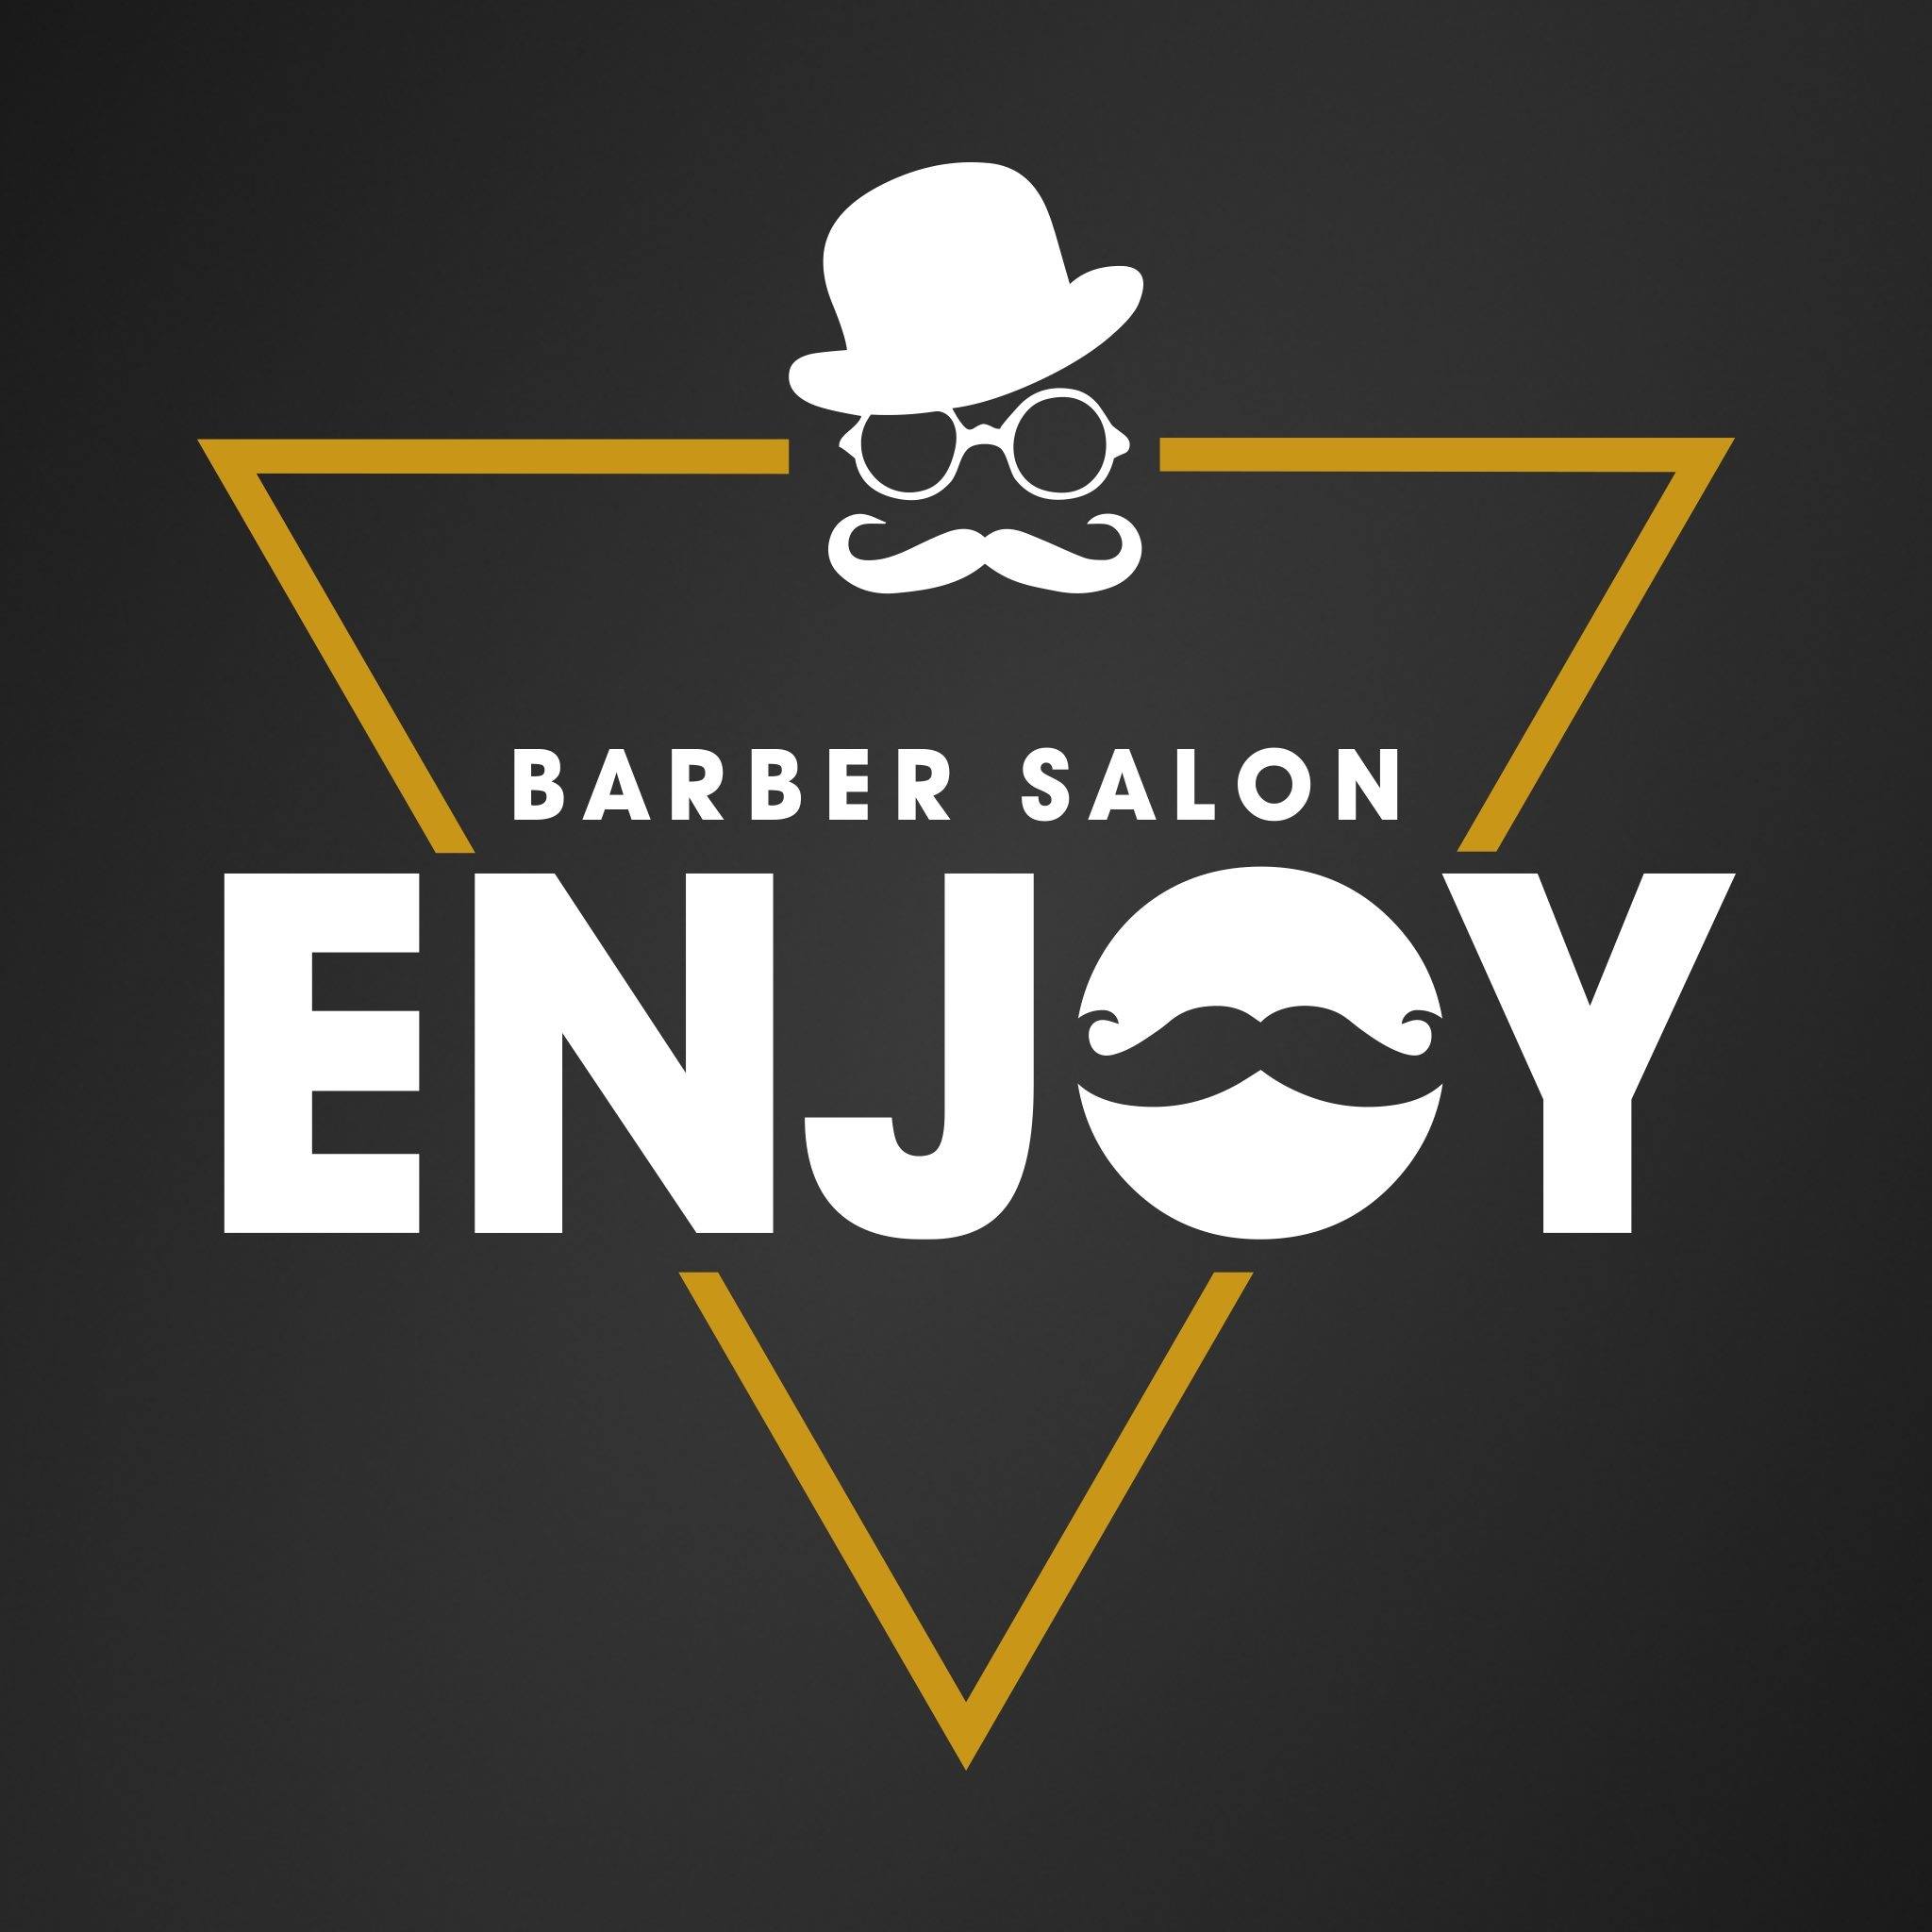 Enjoy Barber Salon